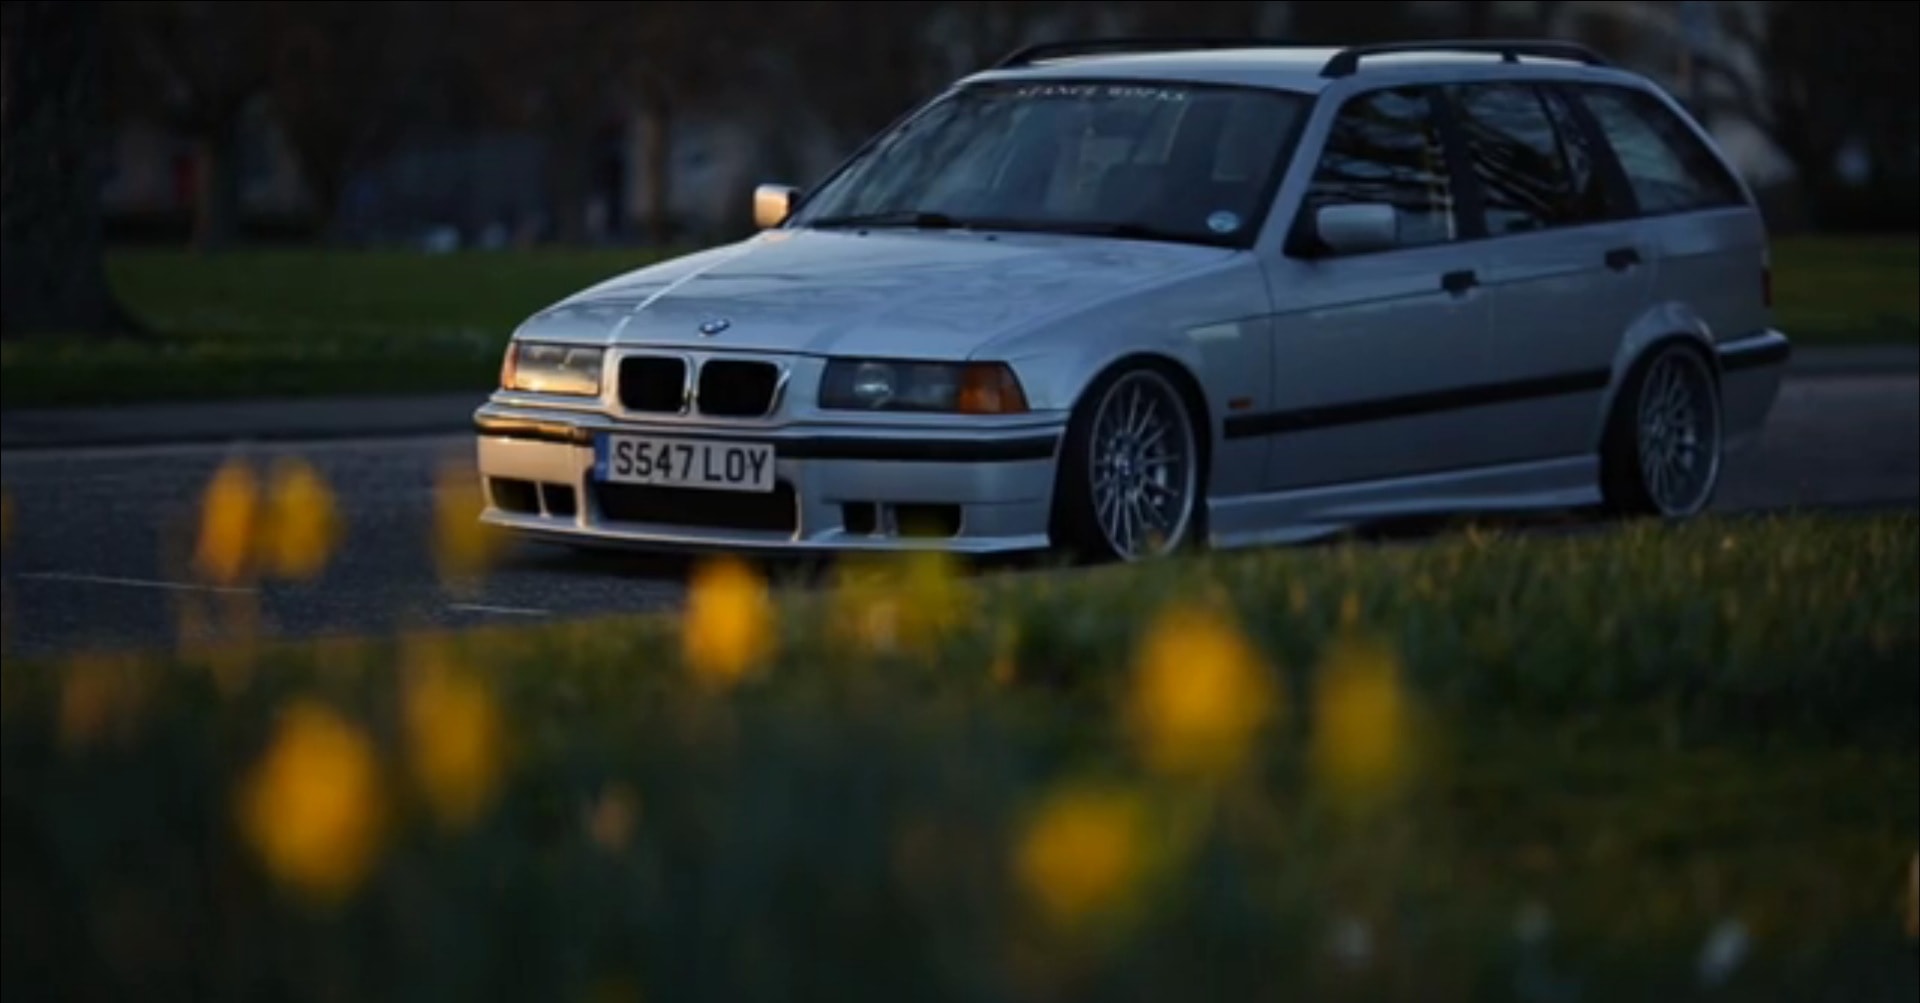 E36.ONLY®️ BMW E36 (@e36.only) • Instagram photos and videos